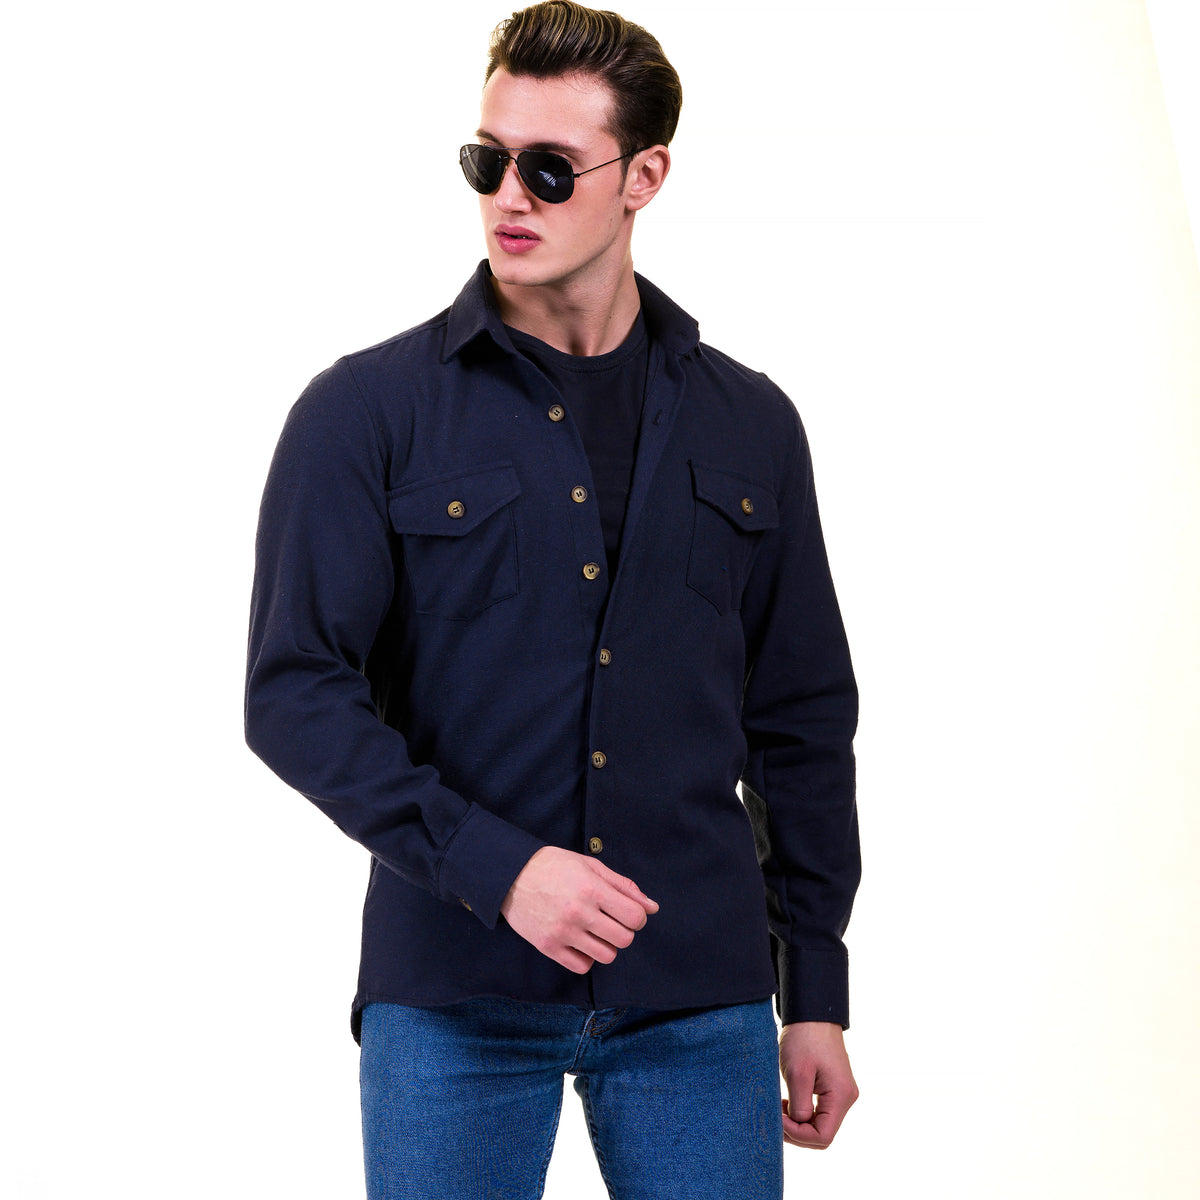 Men Slim Fit Solid Spread Collar Double Pocket Casual Shirt